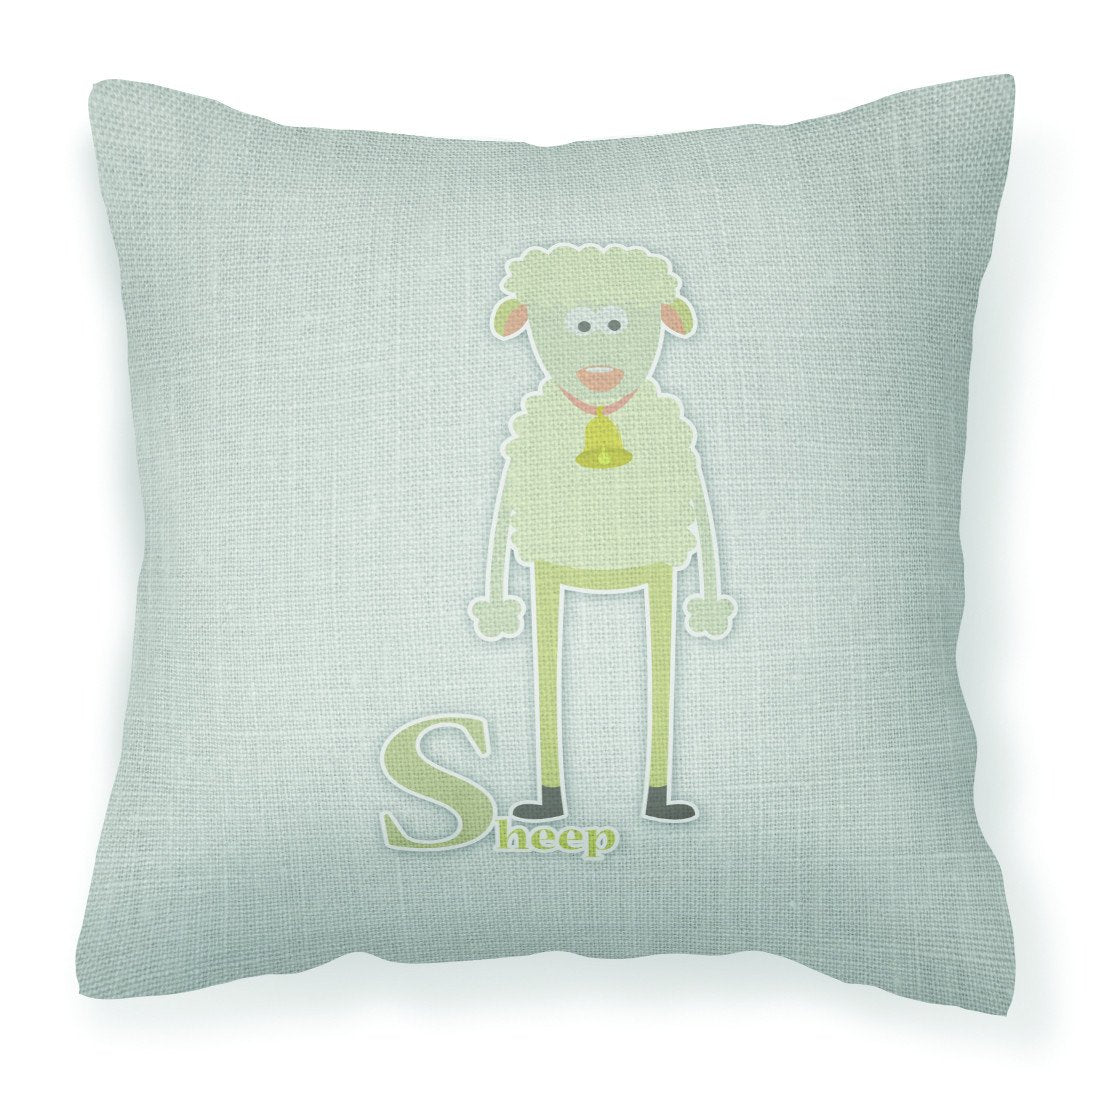 Alphabet S for Sheep Fabric Decorative Pillow BB5744PW1818 by Caroline's Treasures